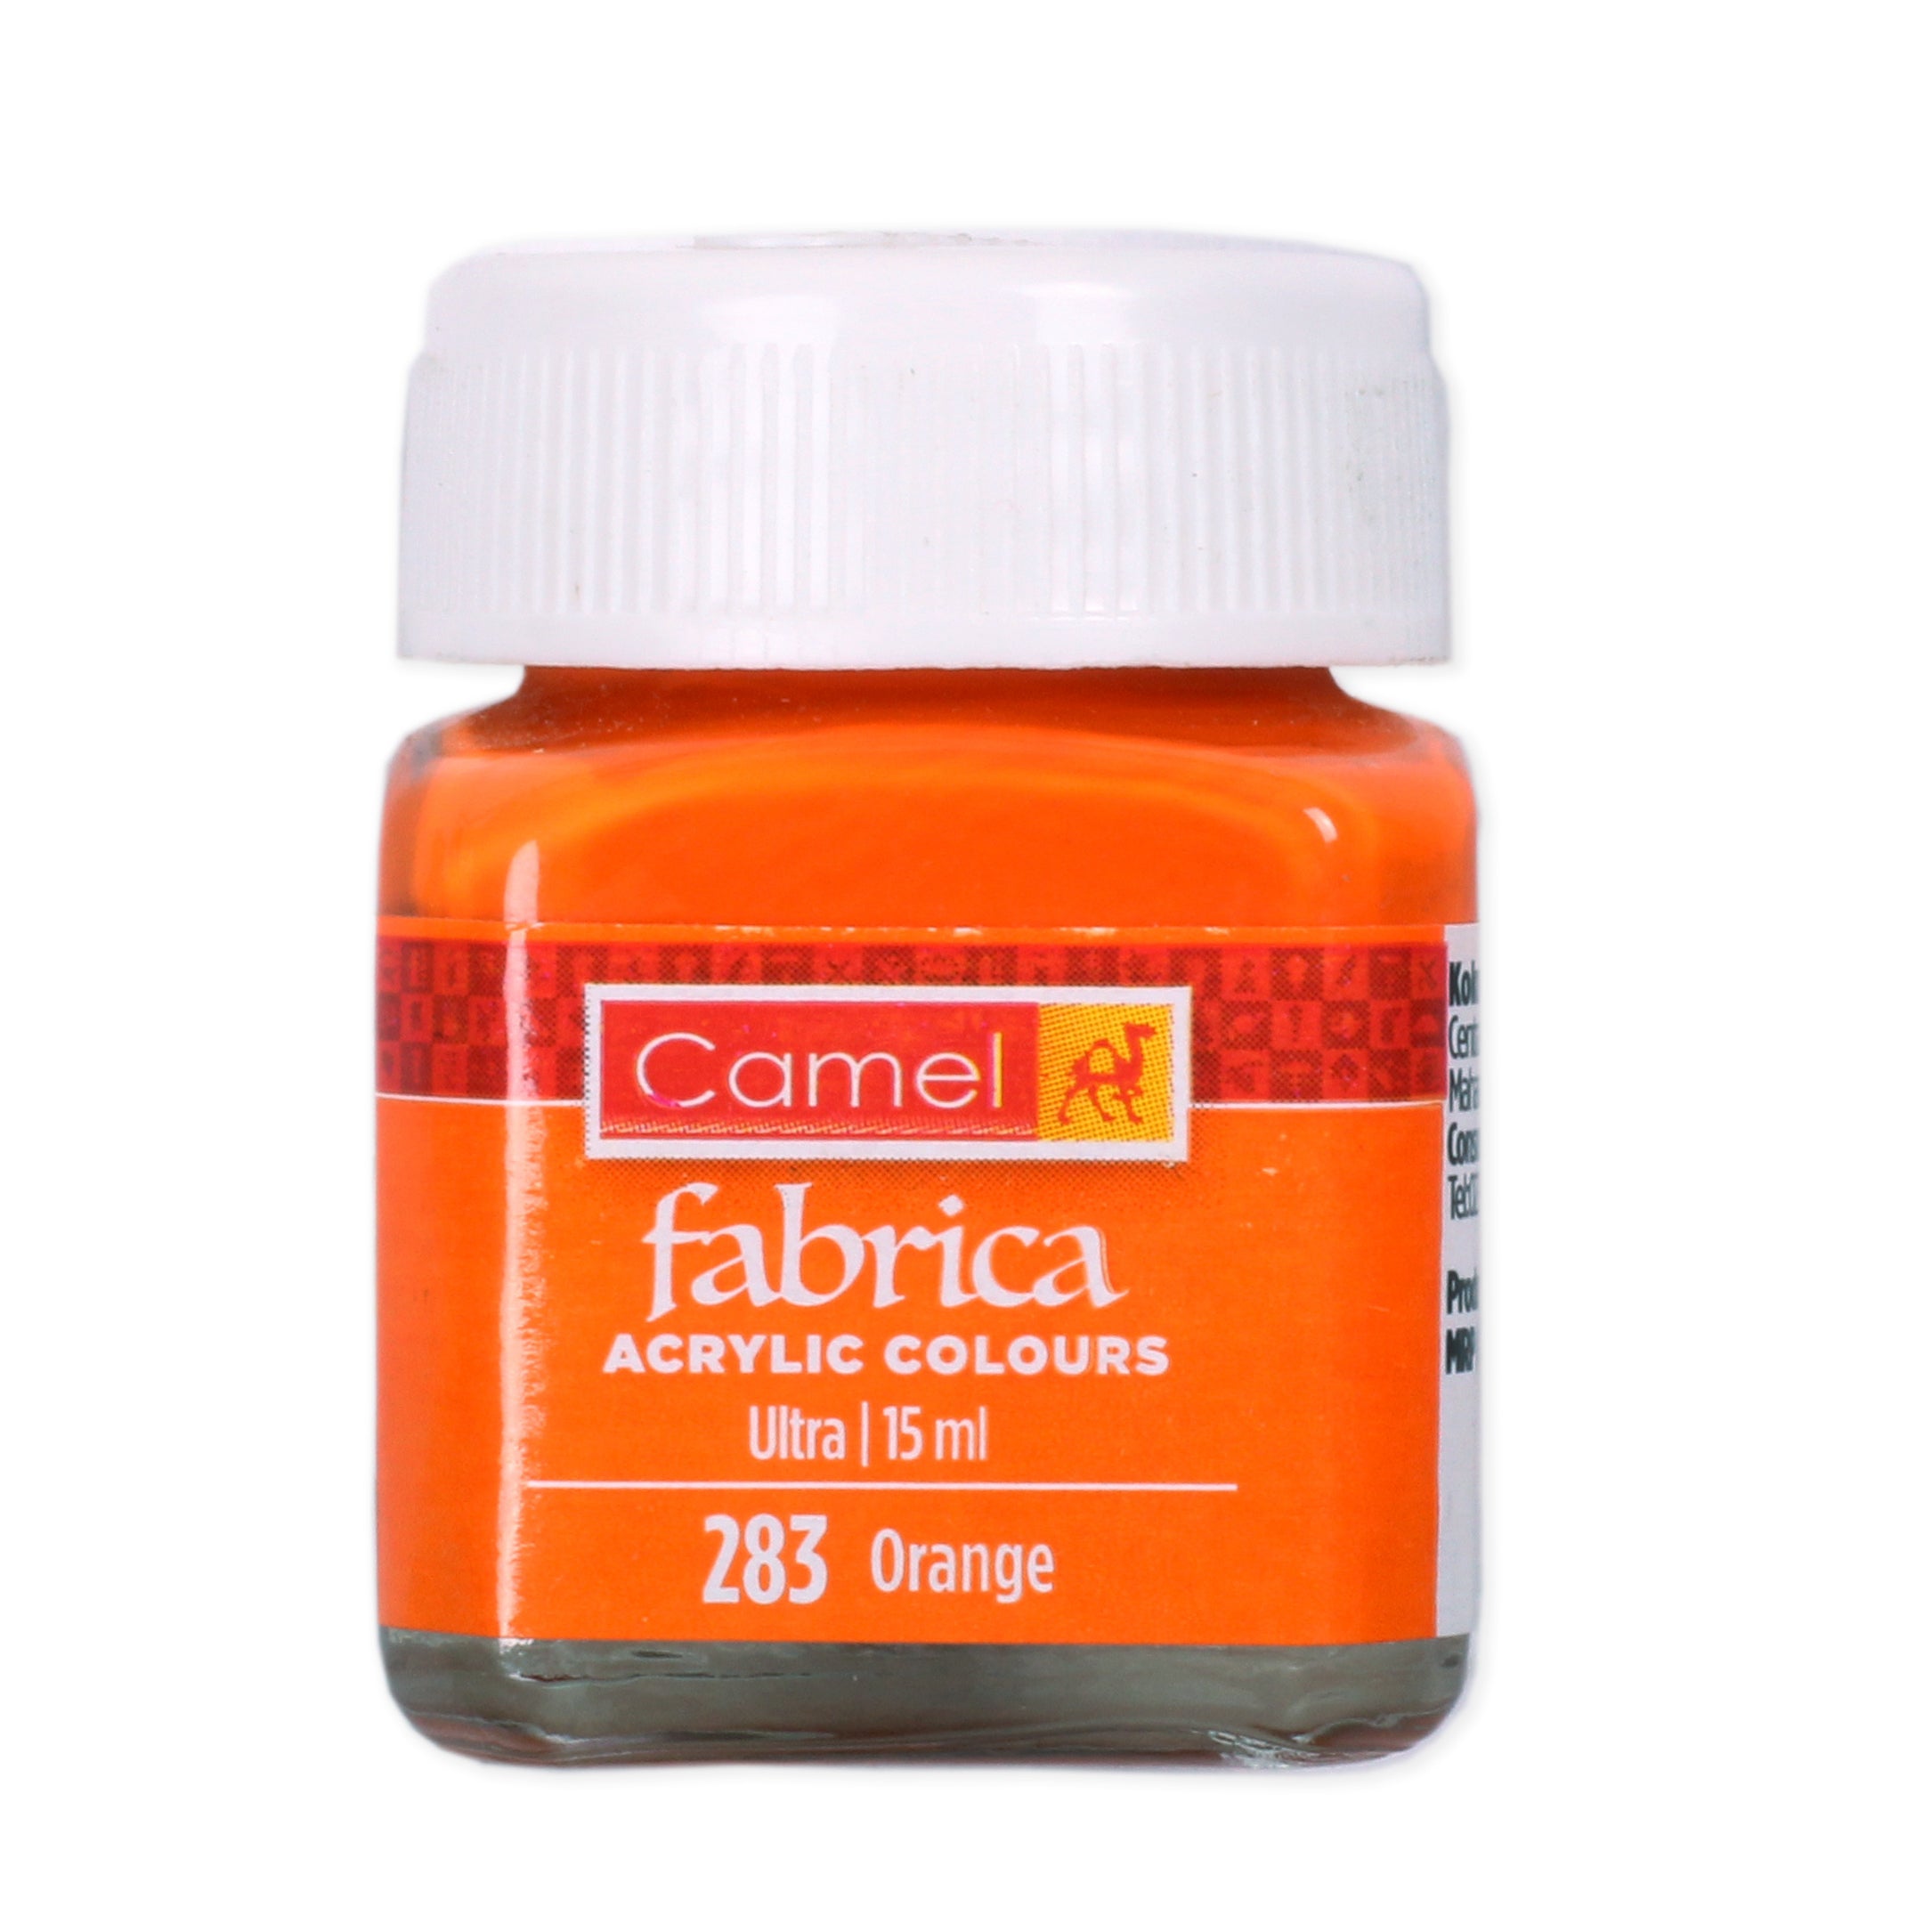 Fabrica Acrylic Colour Sr1 Orange 15Ml Bottle Camlin